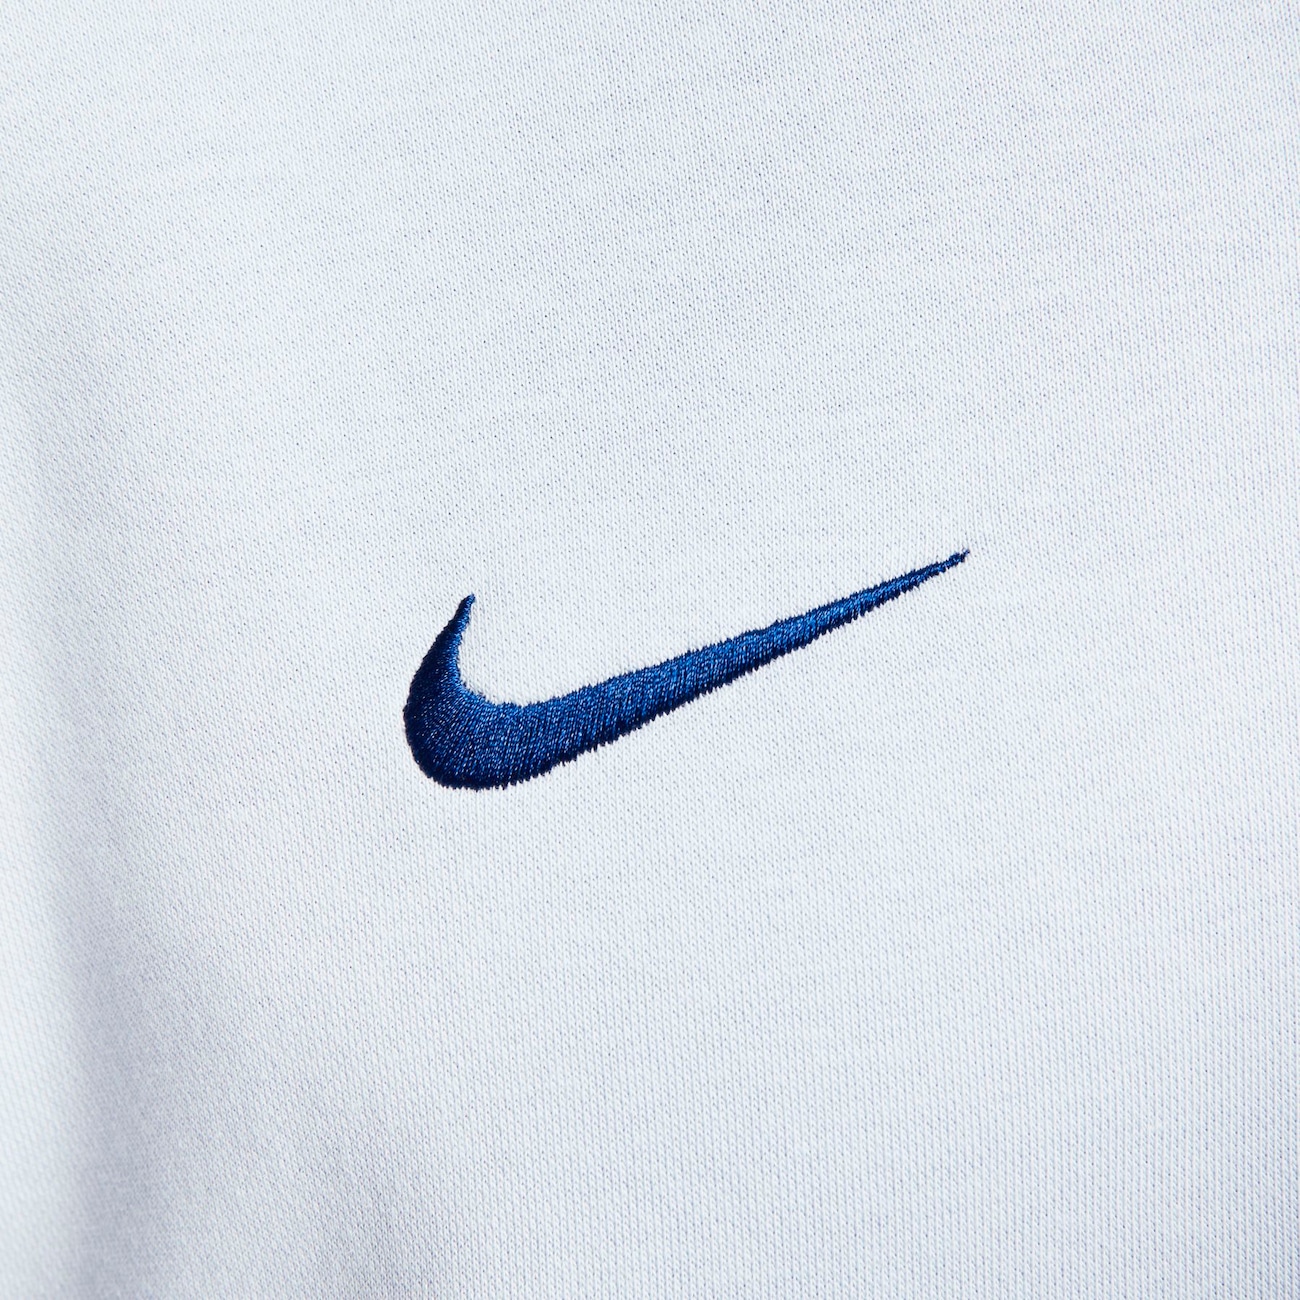 Blusão Nike França Club Fleece Masculino - Nike